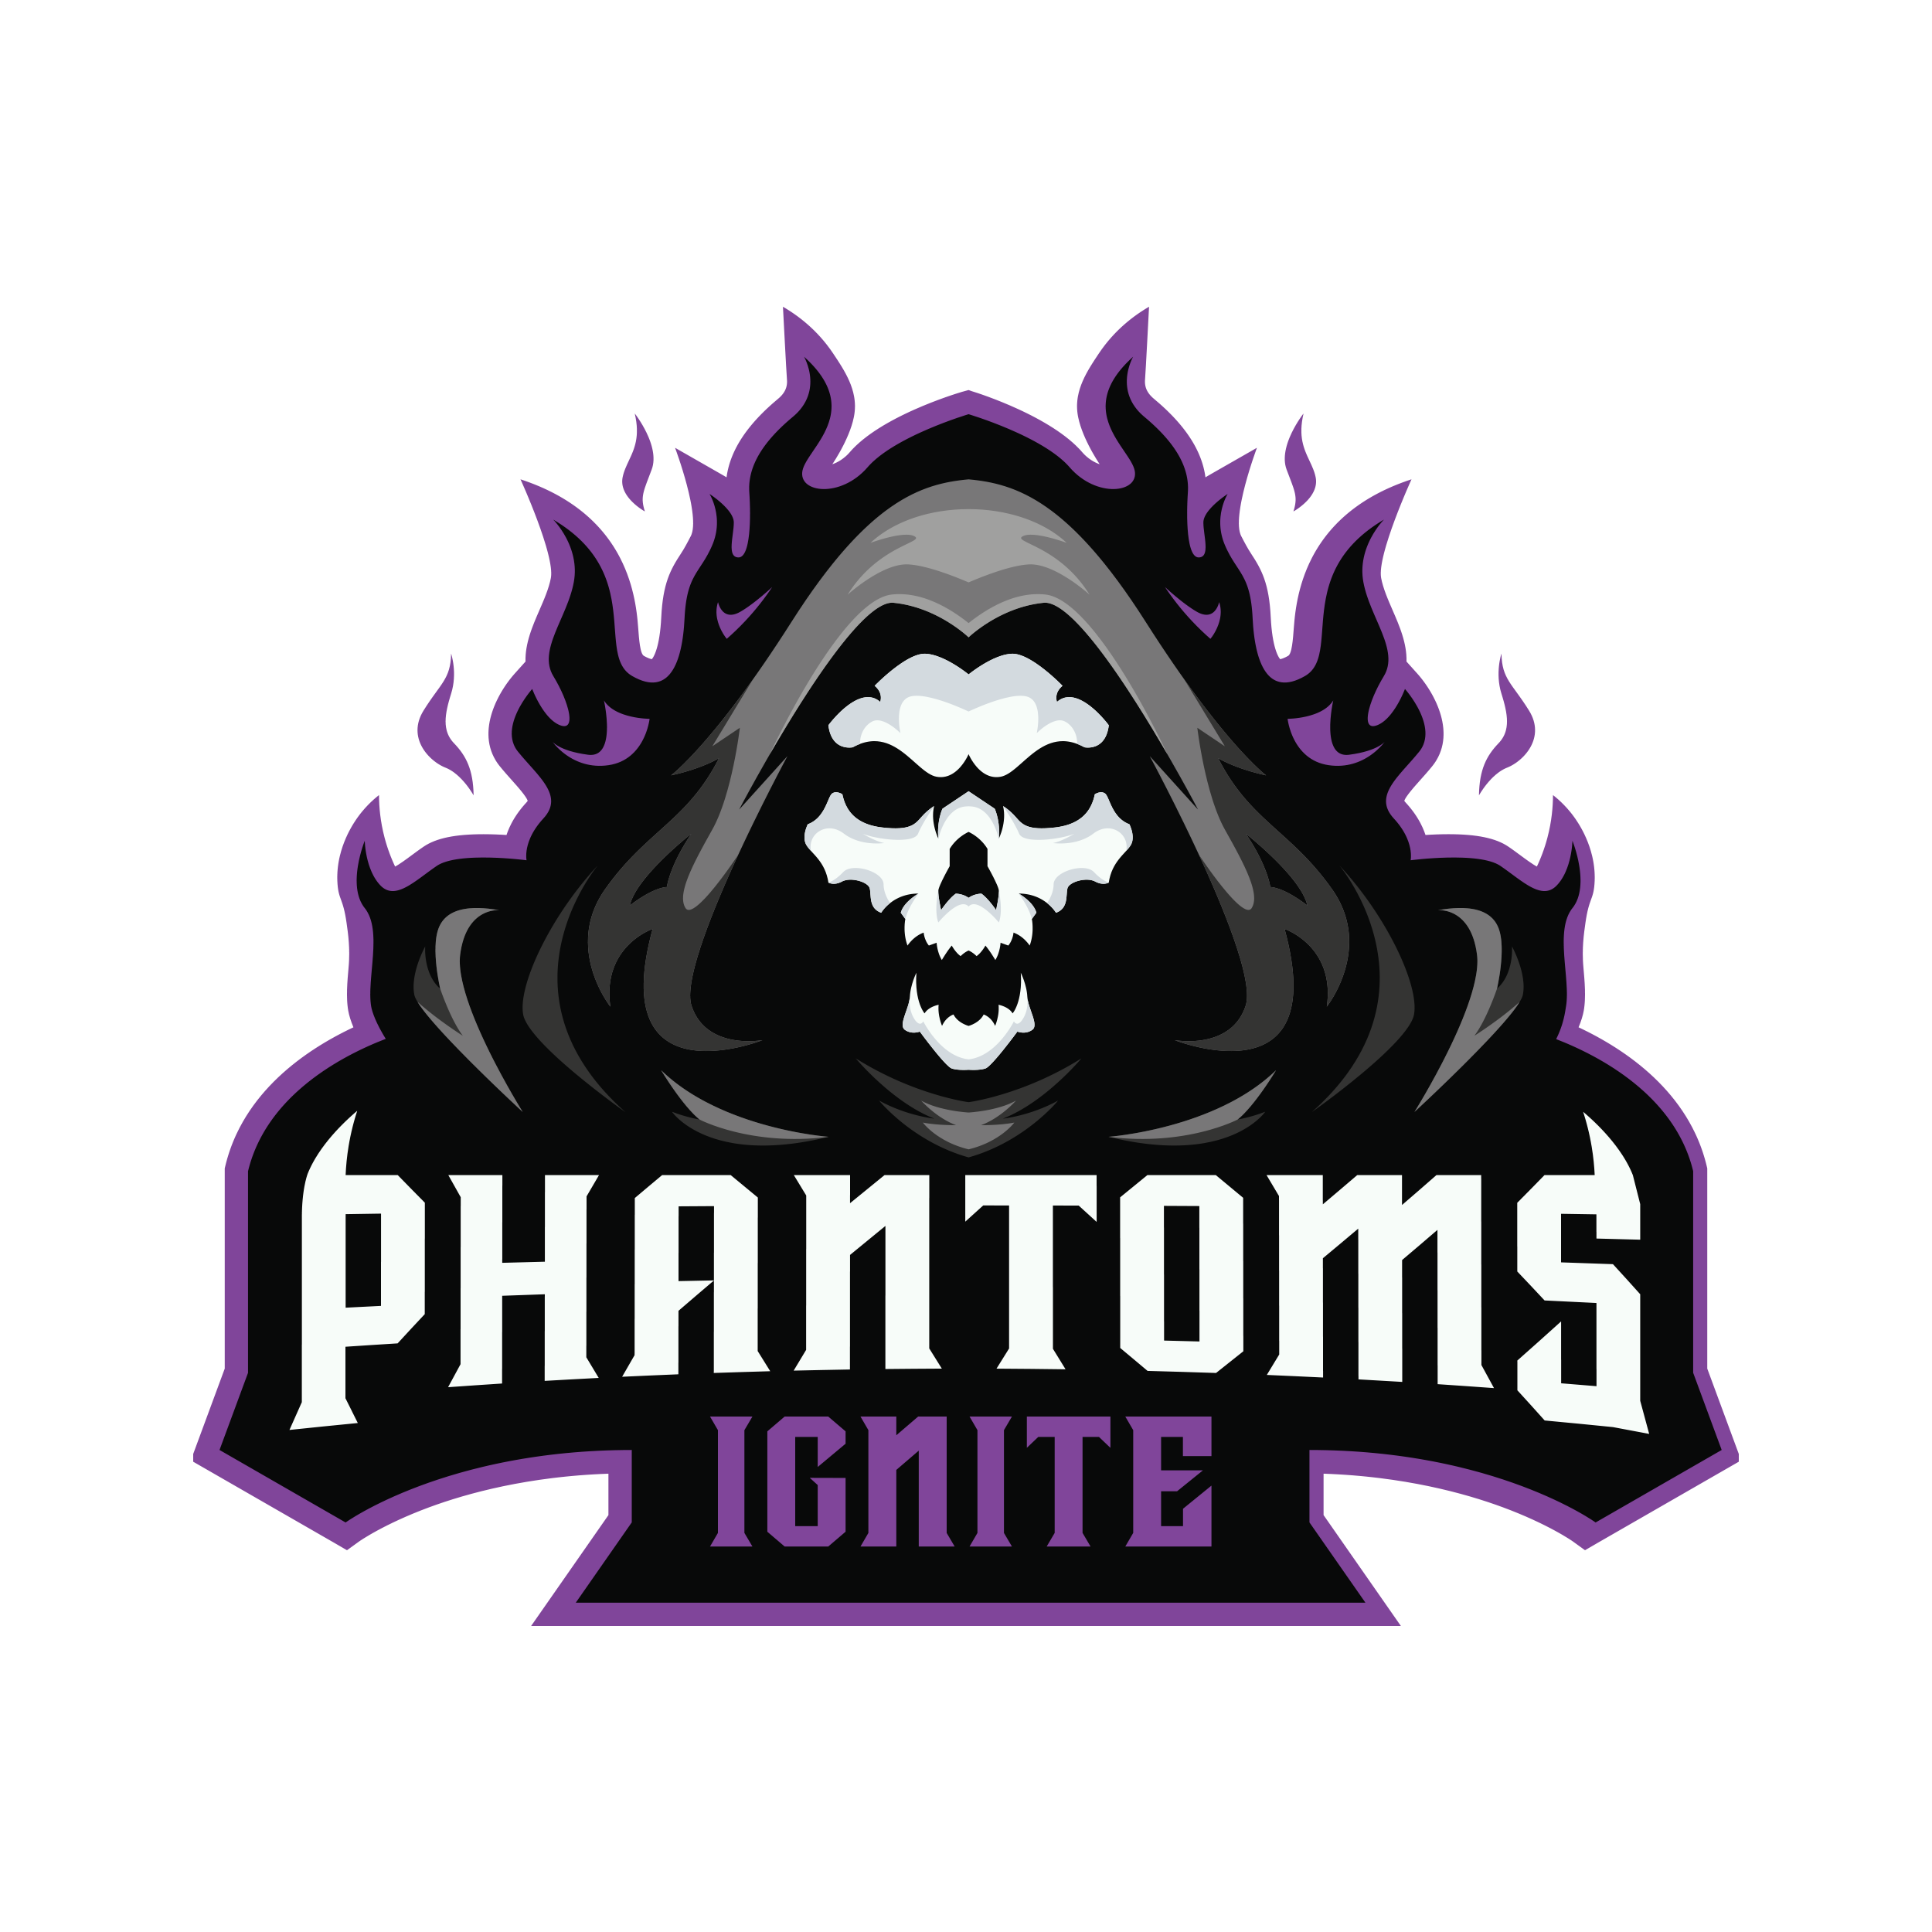 Phantoms-Ignite